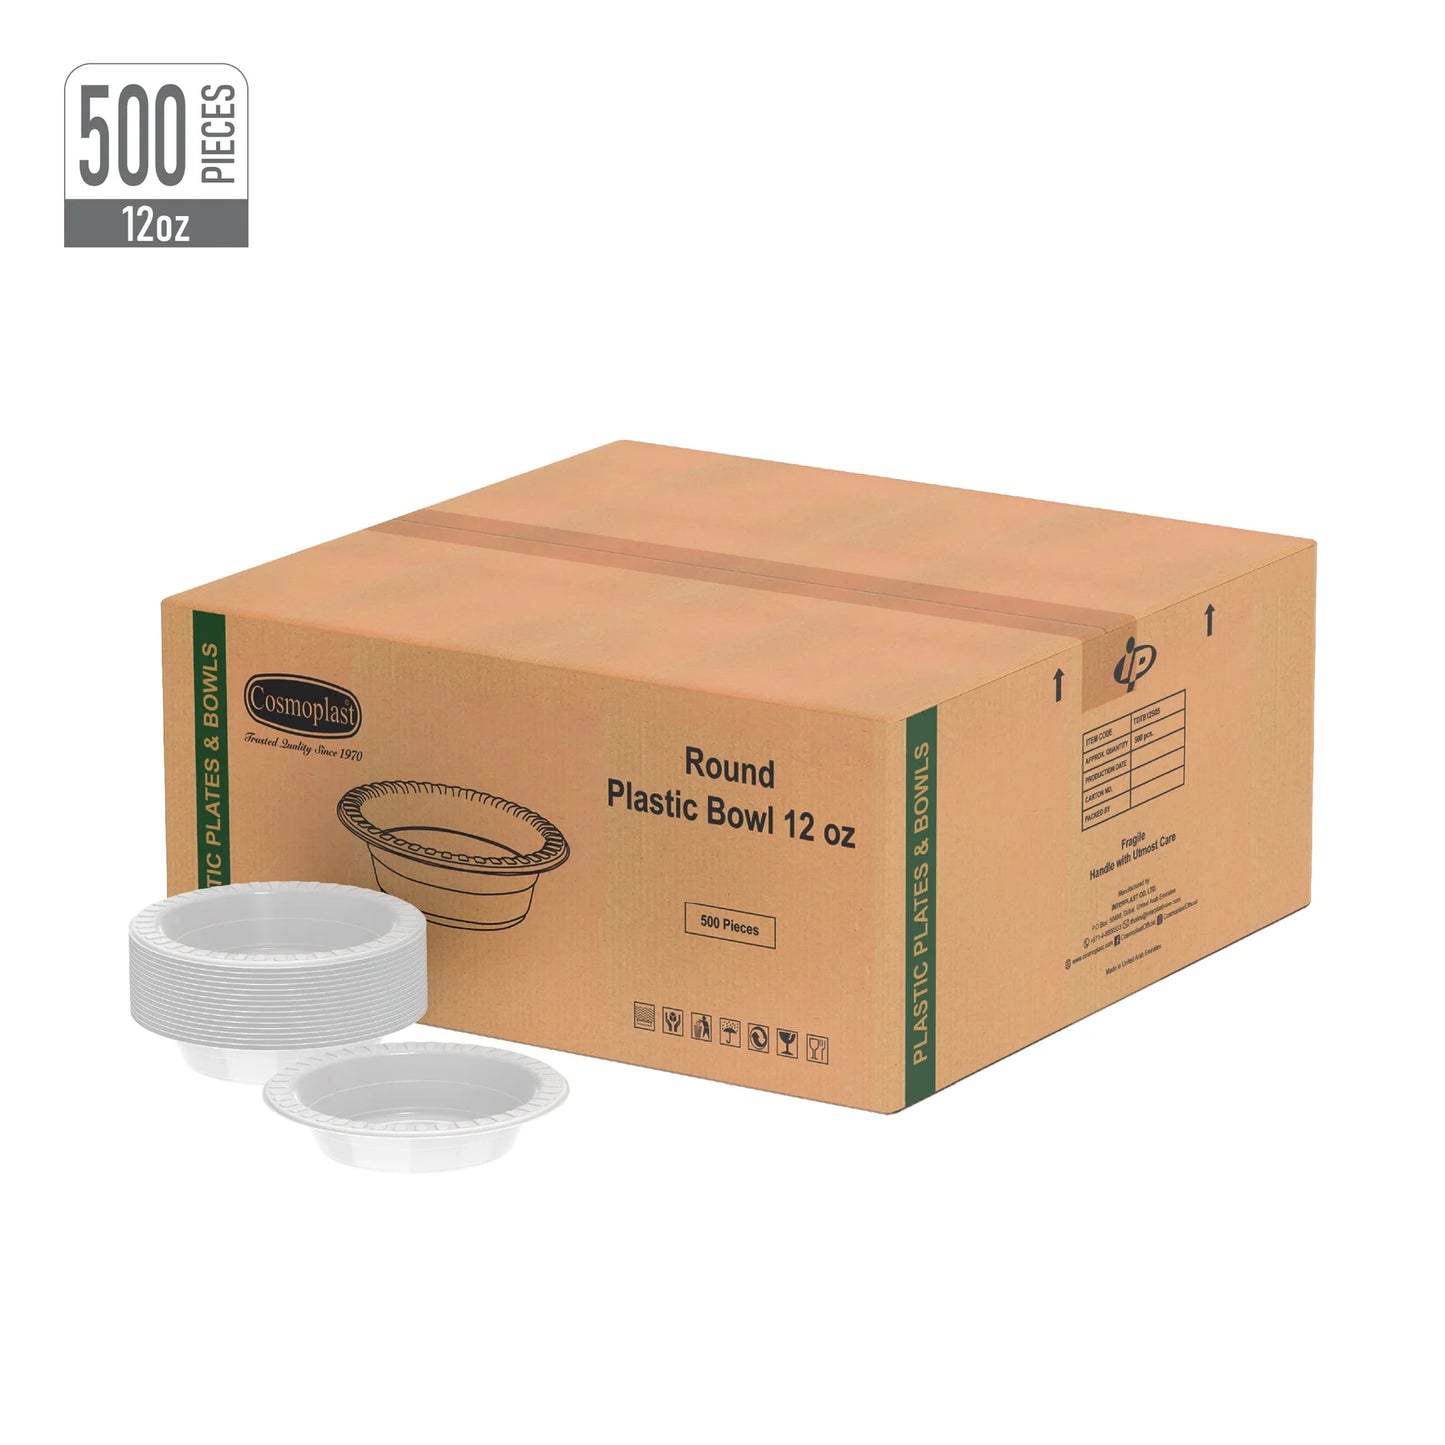 Wholesale Plastic Round Bowls 12oz 500pcs-Cosmoplast Oman